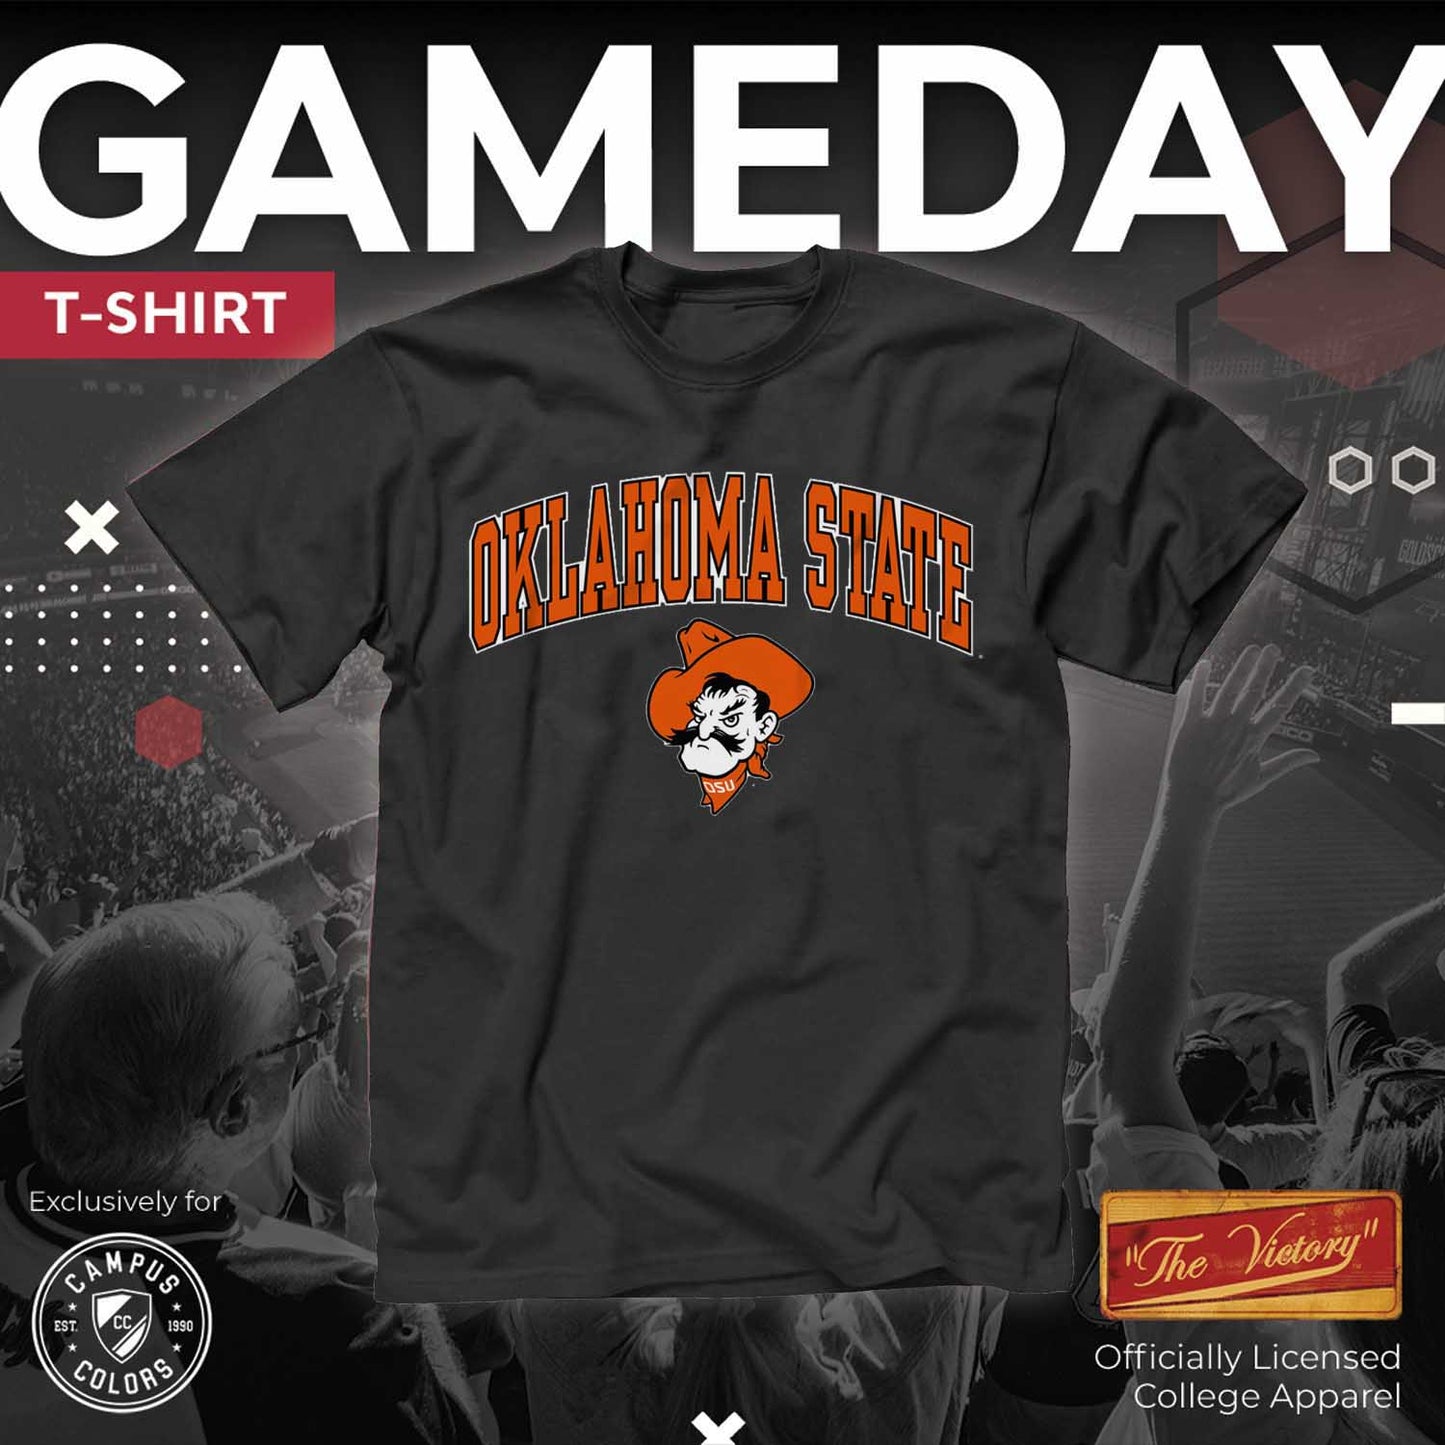 Oklahoma State Cowboys NCAA Adult Gameday Cotton T-Shirt - Black